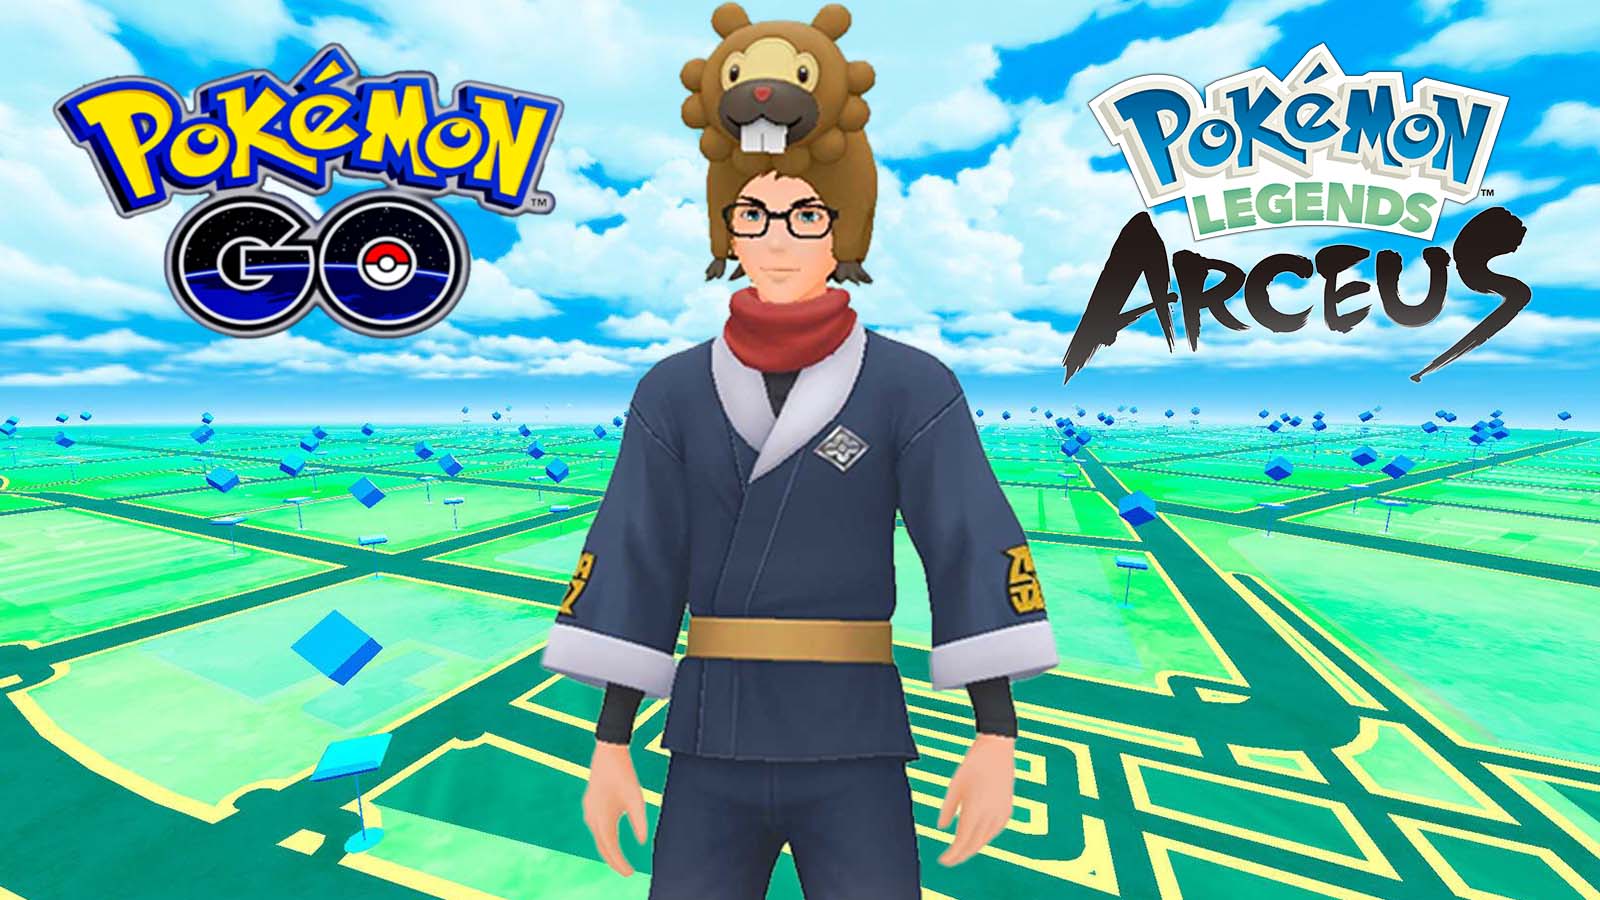 How to get free Pokemon Arceus Legends outfits in Pokemon Go - Dexerto